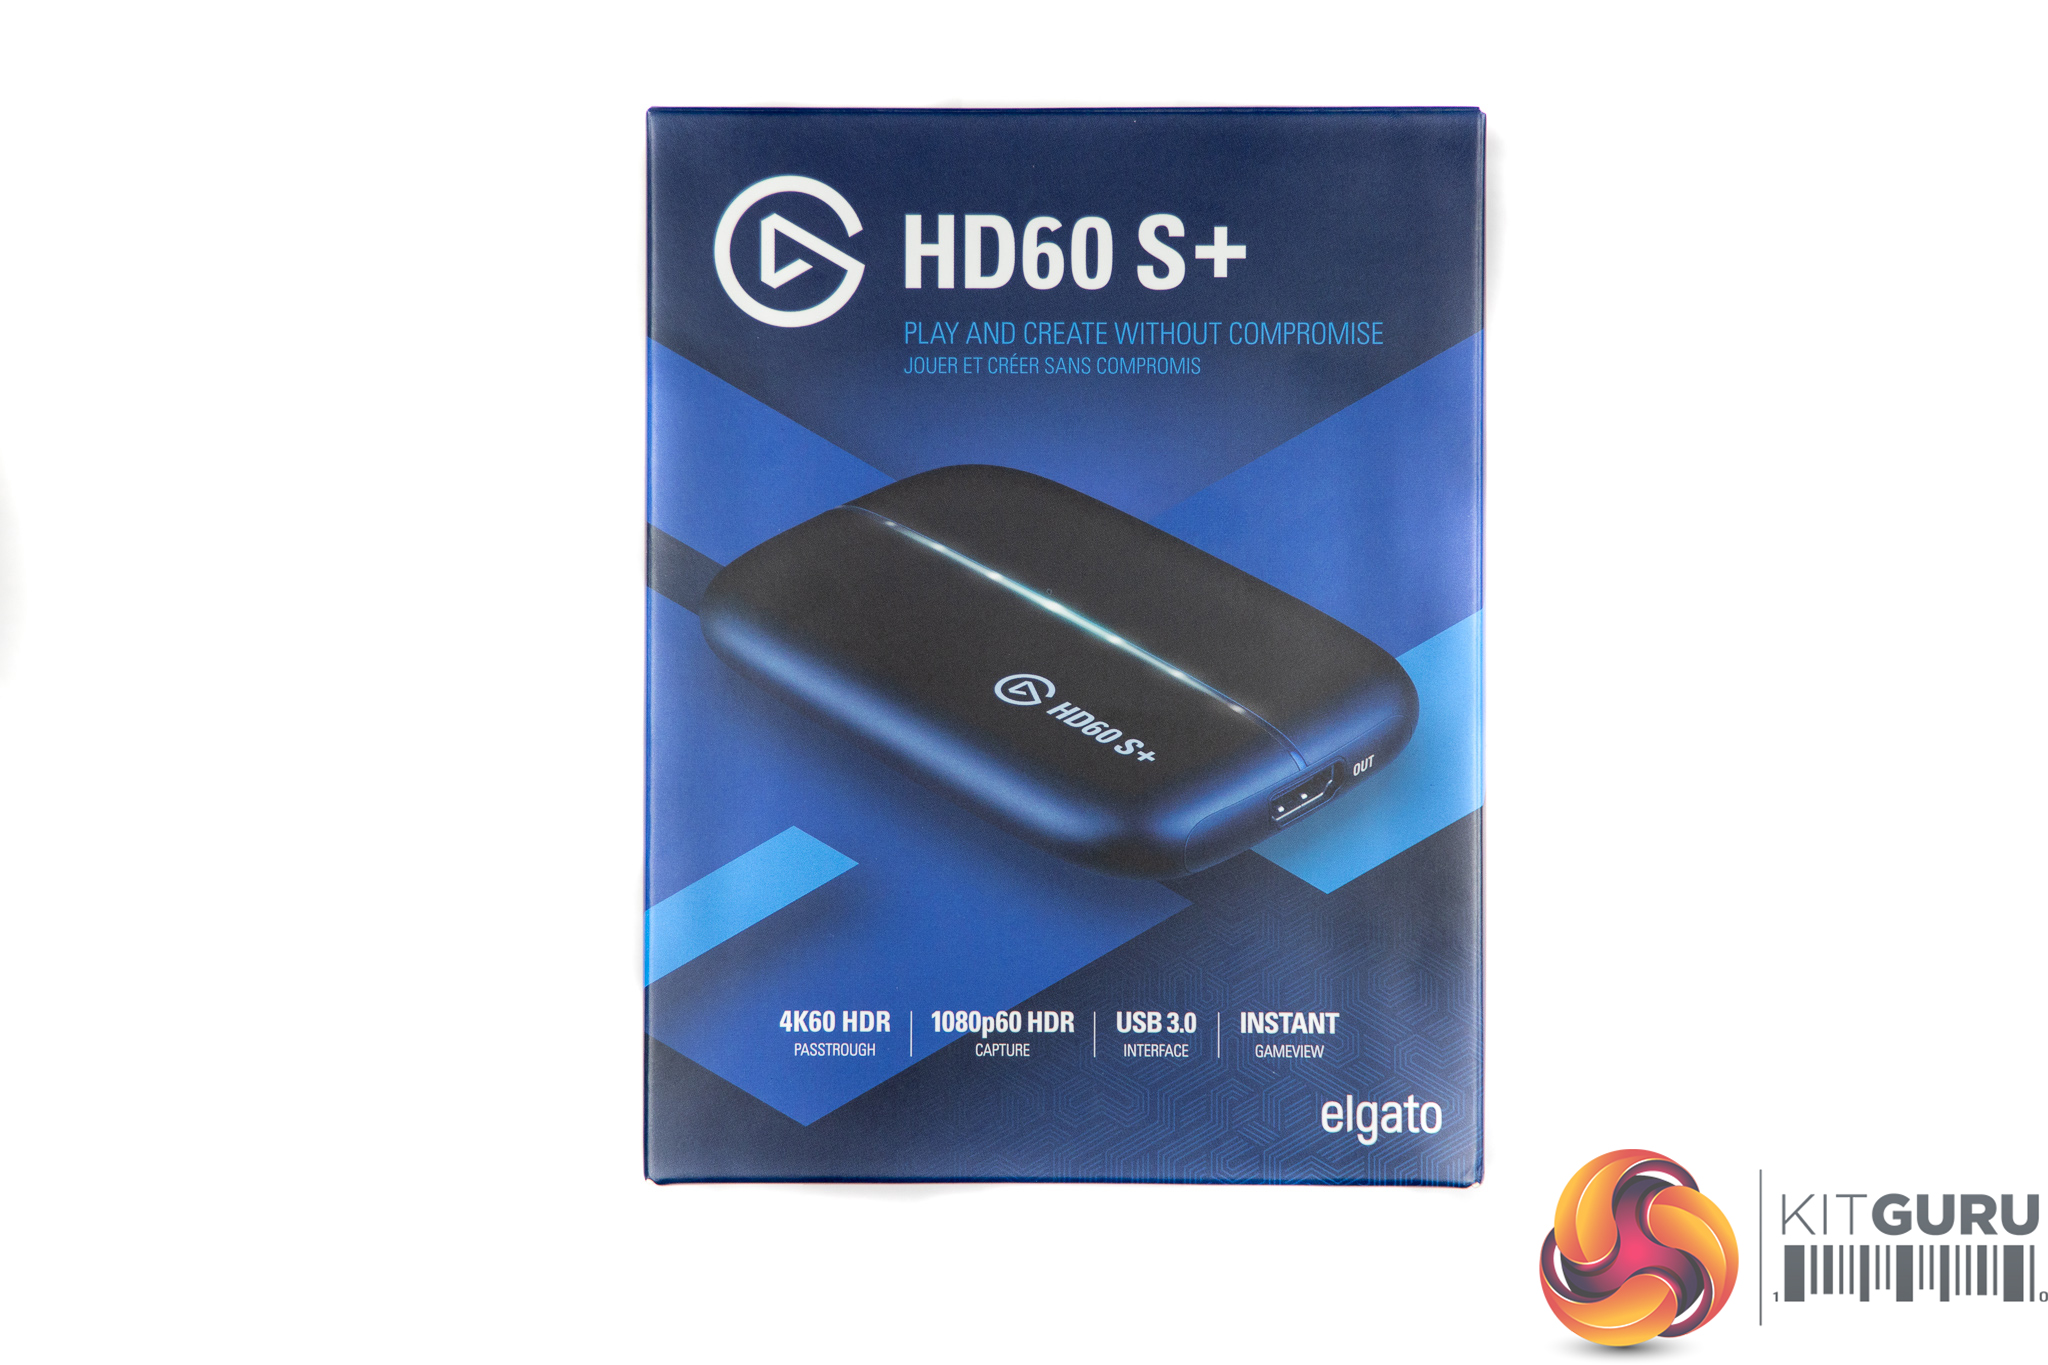 Elgato HD60 S+ Capture Card Review | KitGuru